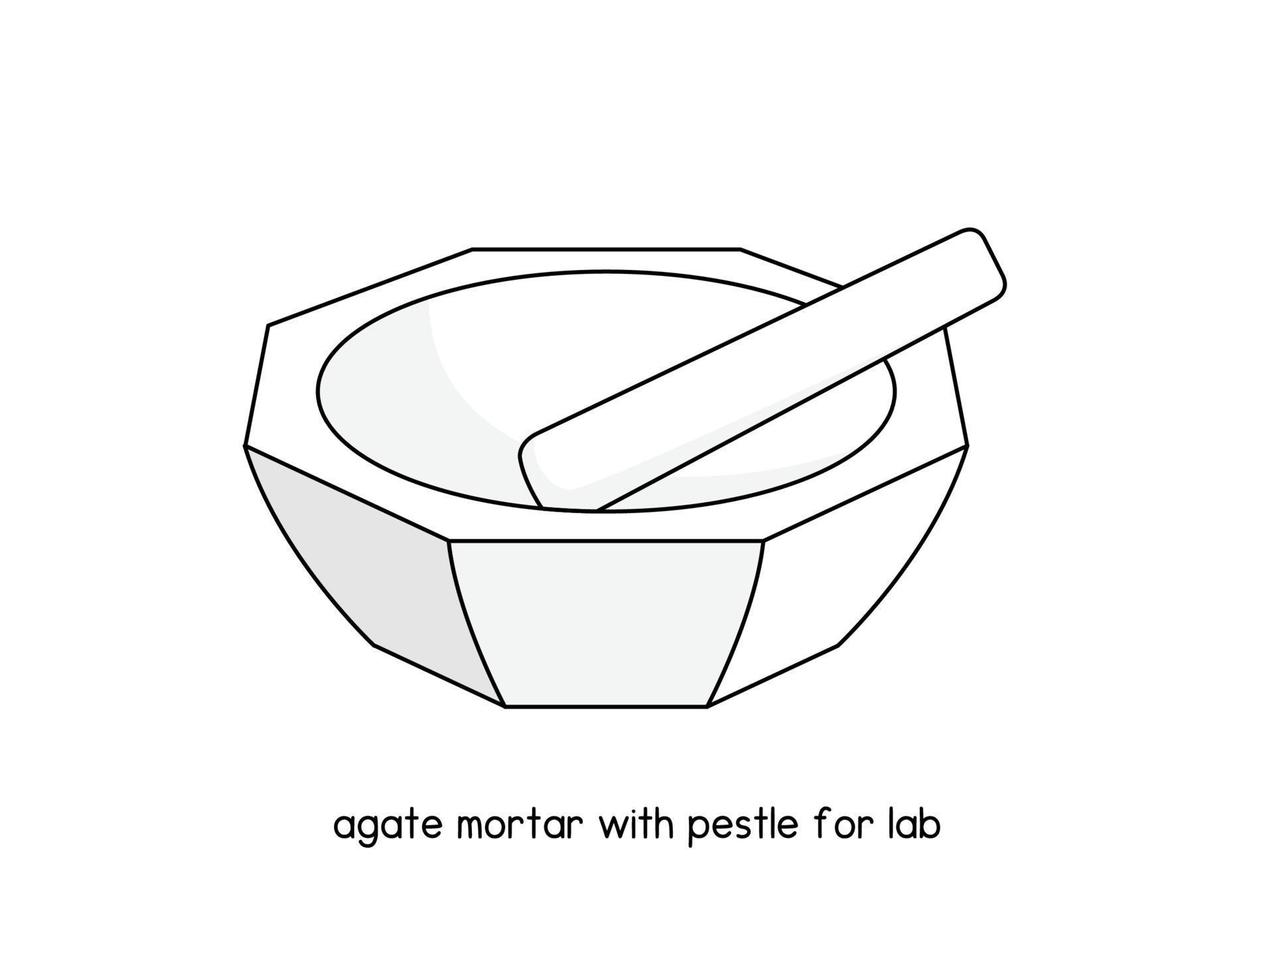 agate mortar with pestle for lab diagram for experiment setup lab outline vector illustration